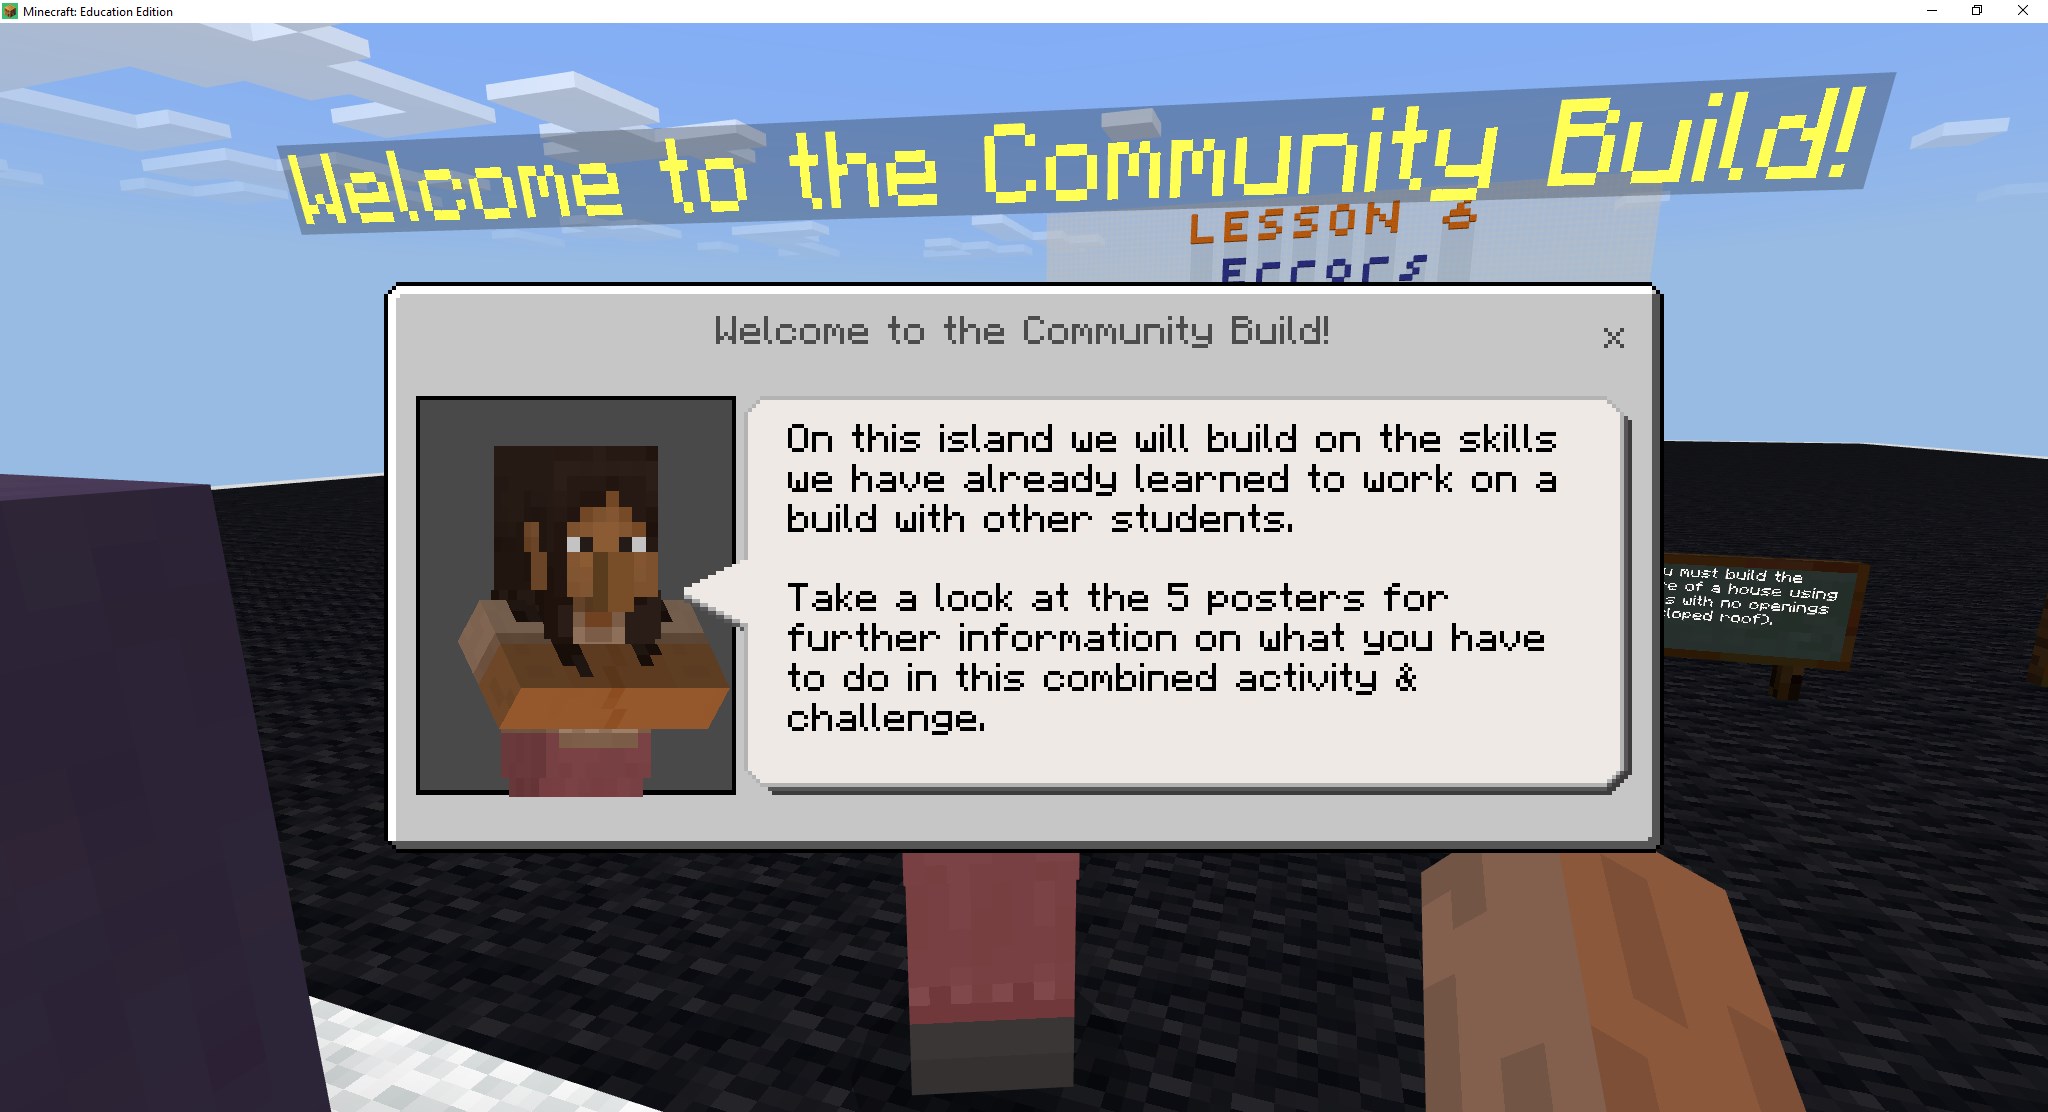 Combining Minecraft accounts? - Microsoft Community